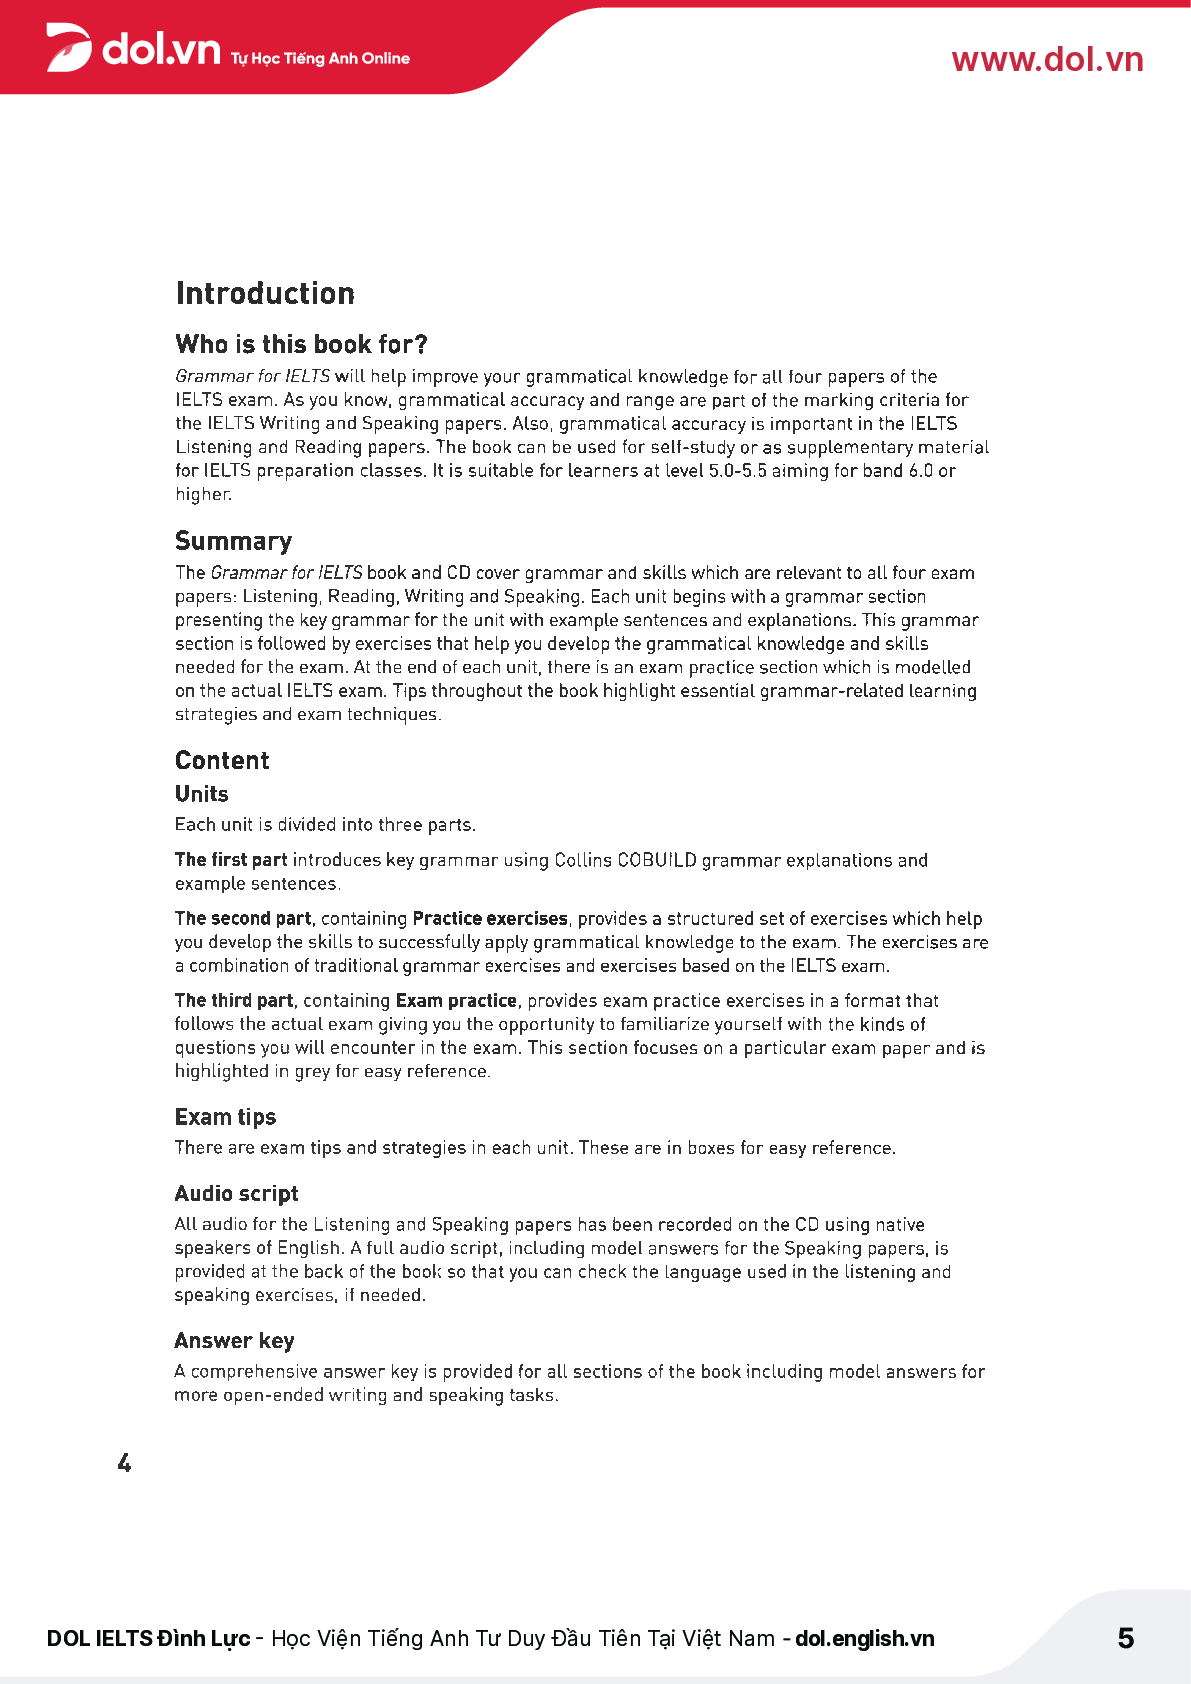 Sách Collins Grammar For IELTS pdf | Xem online, tải PDF miễn phí (trang 5)